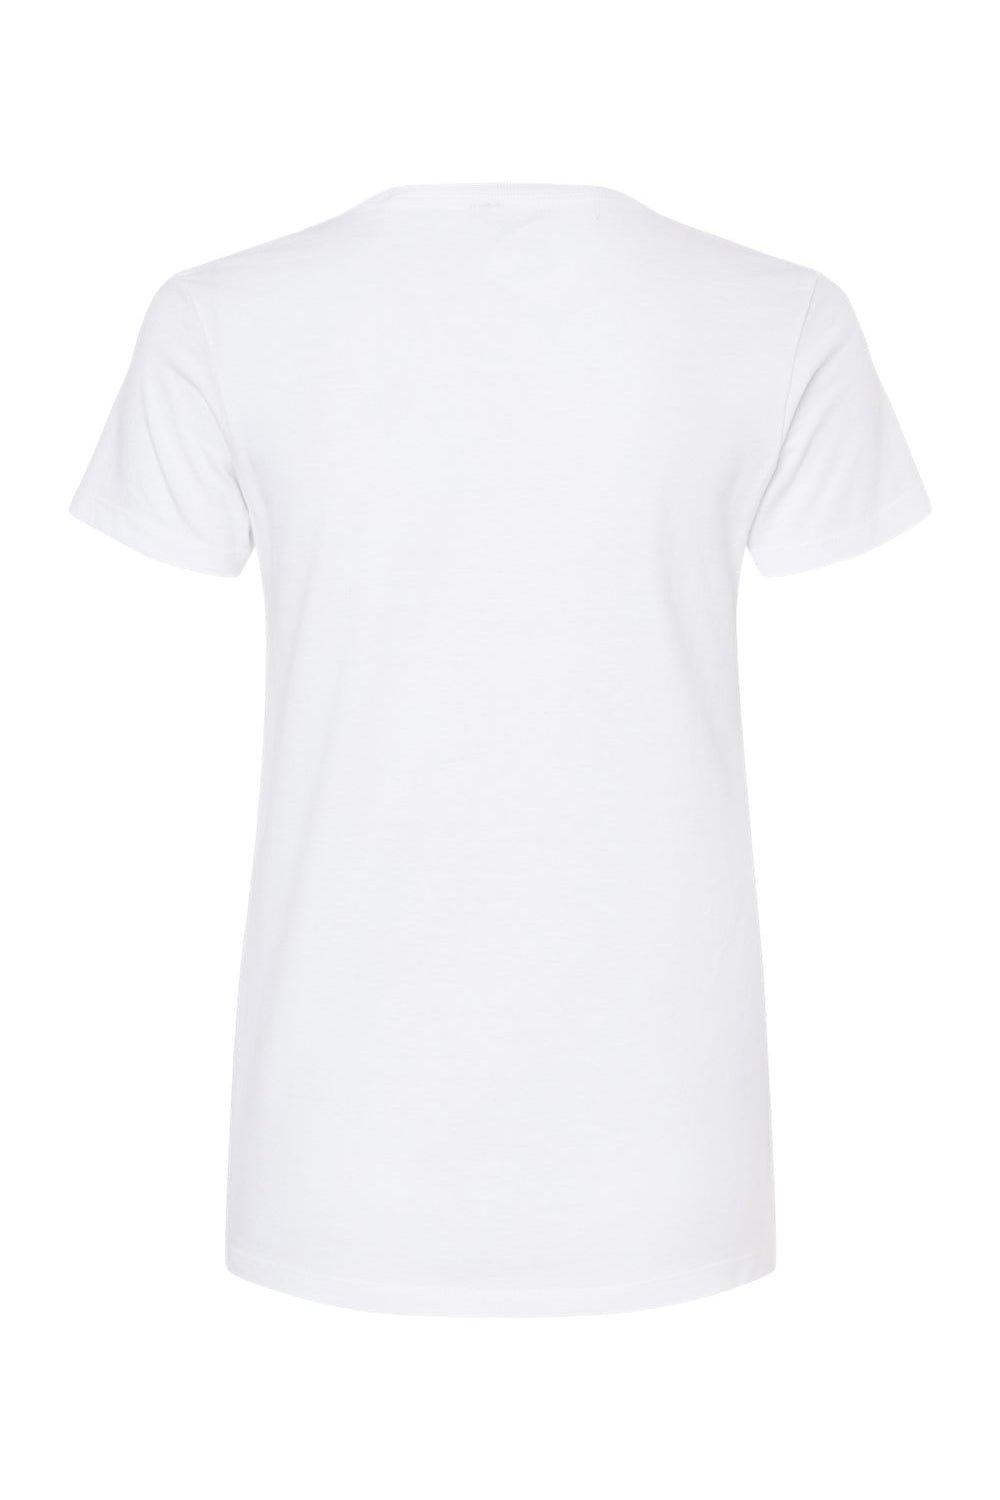 M&O 4810 Womens Gold Soft Touch Short Sleeve Crewneck T-Shirt White Flat Back